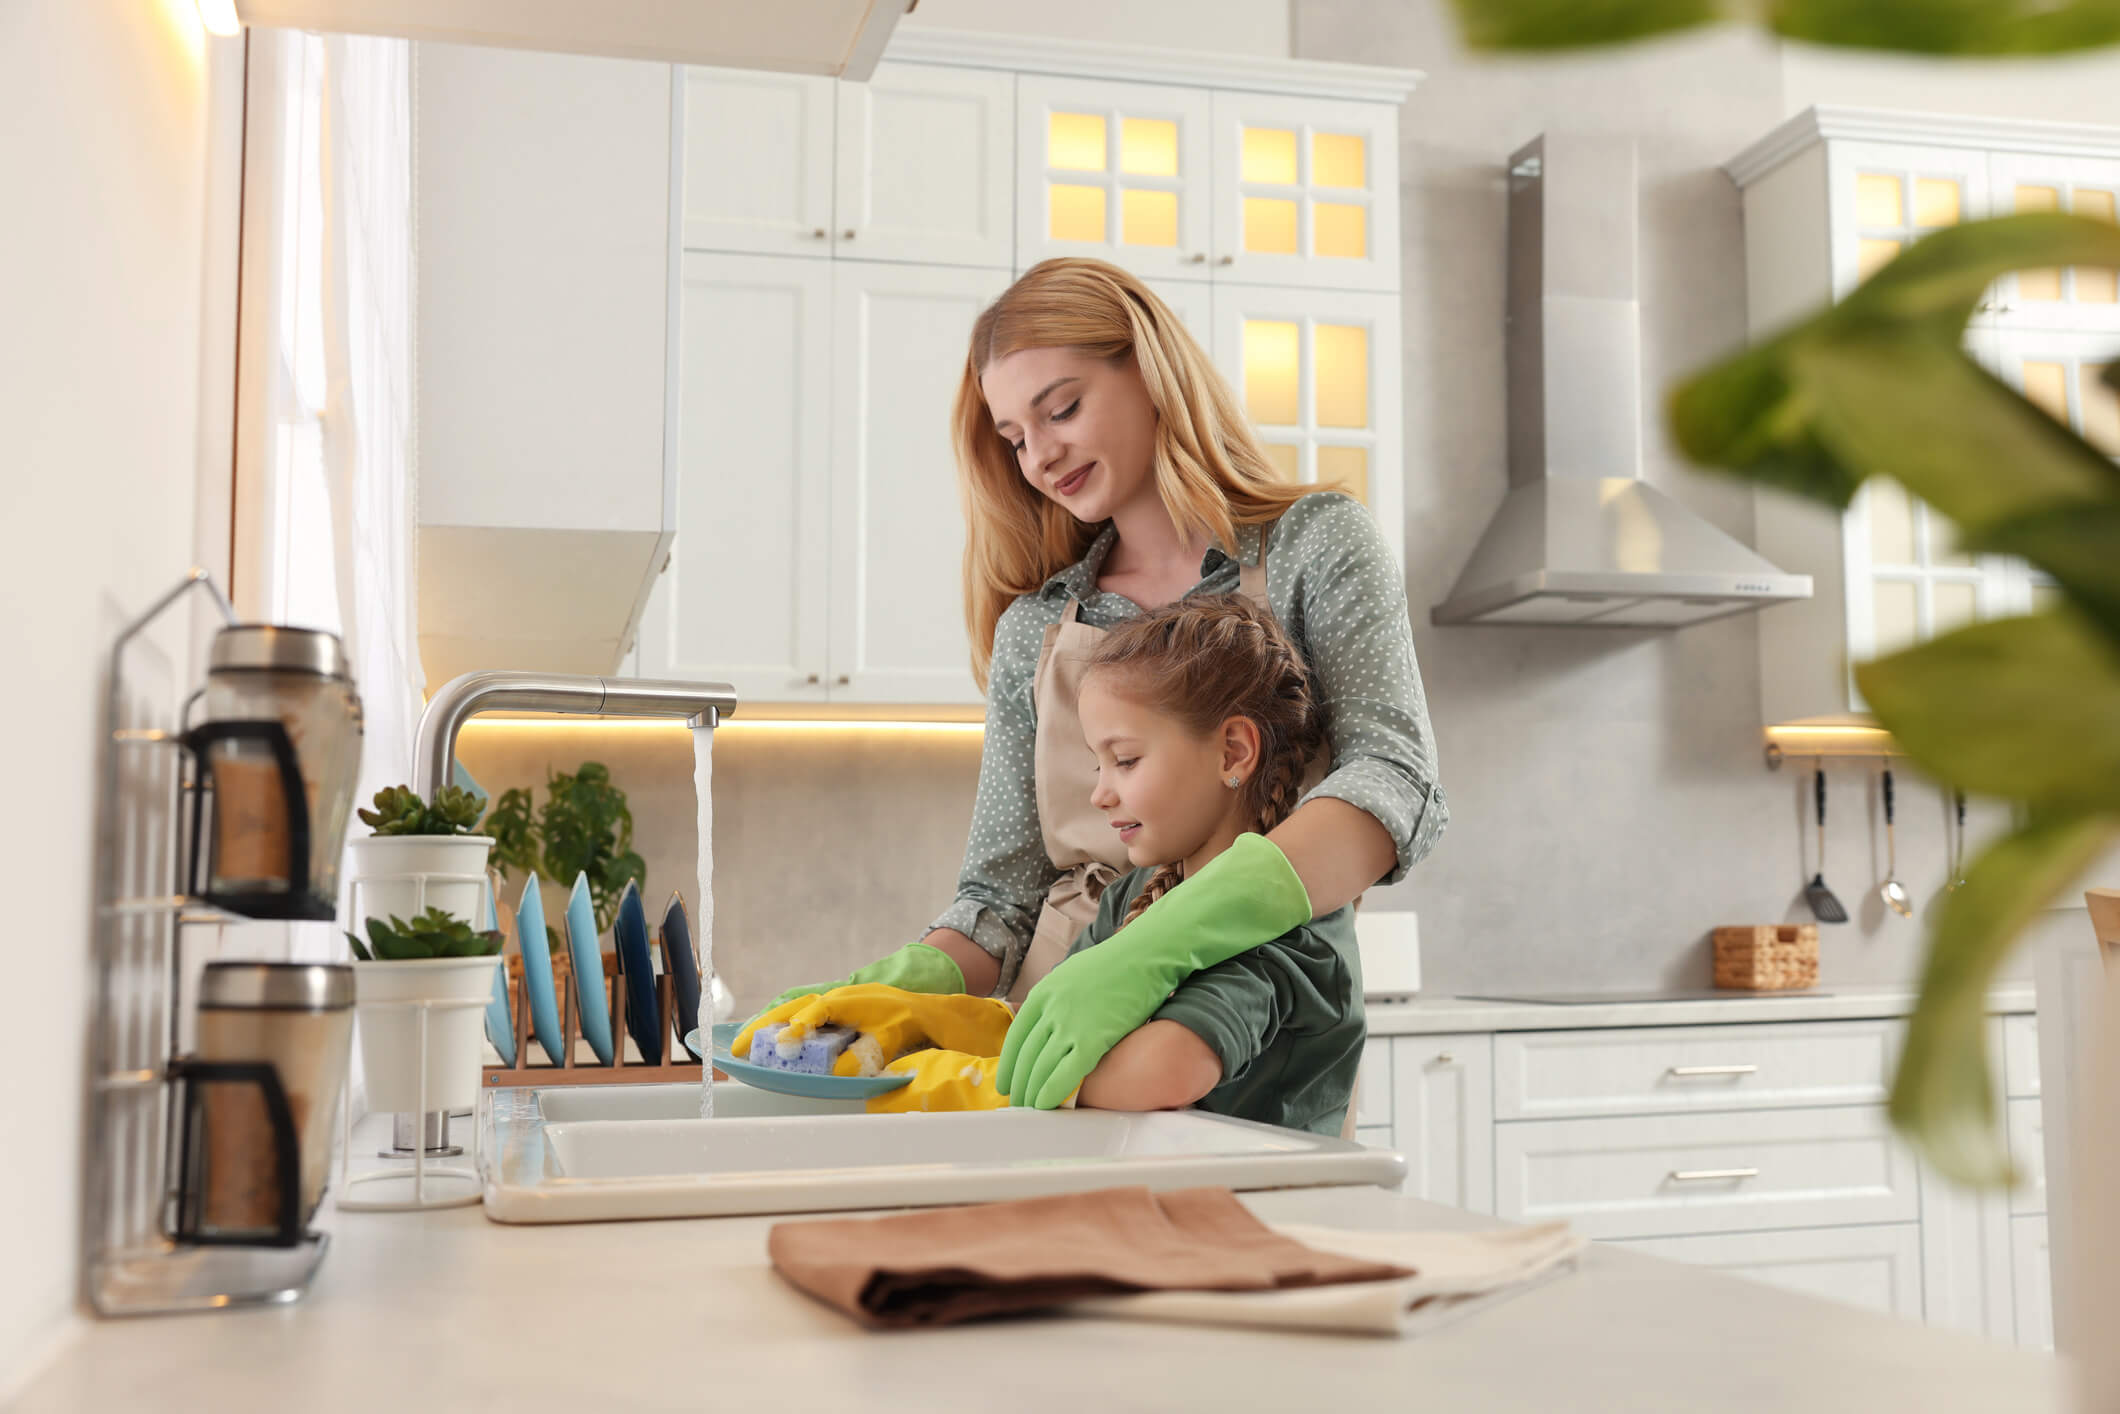 Mom wearing green dishwashing gloves helping her son, wearing yellow dishwashing gloves, wash dishes in the kitchen sink.